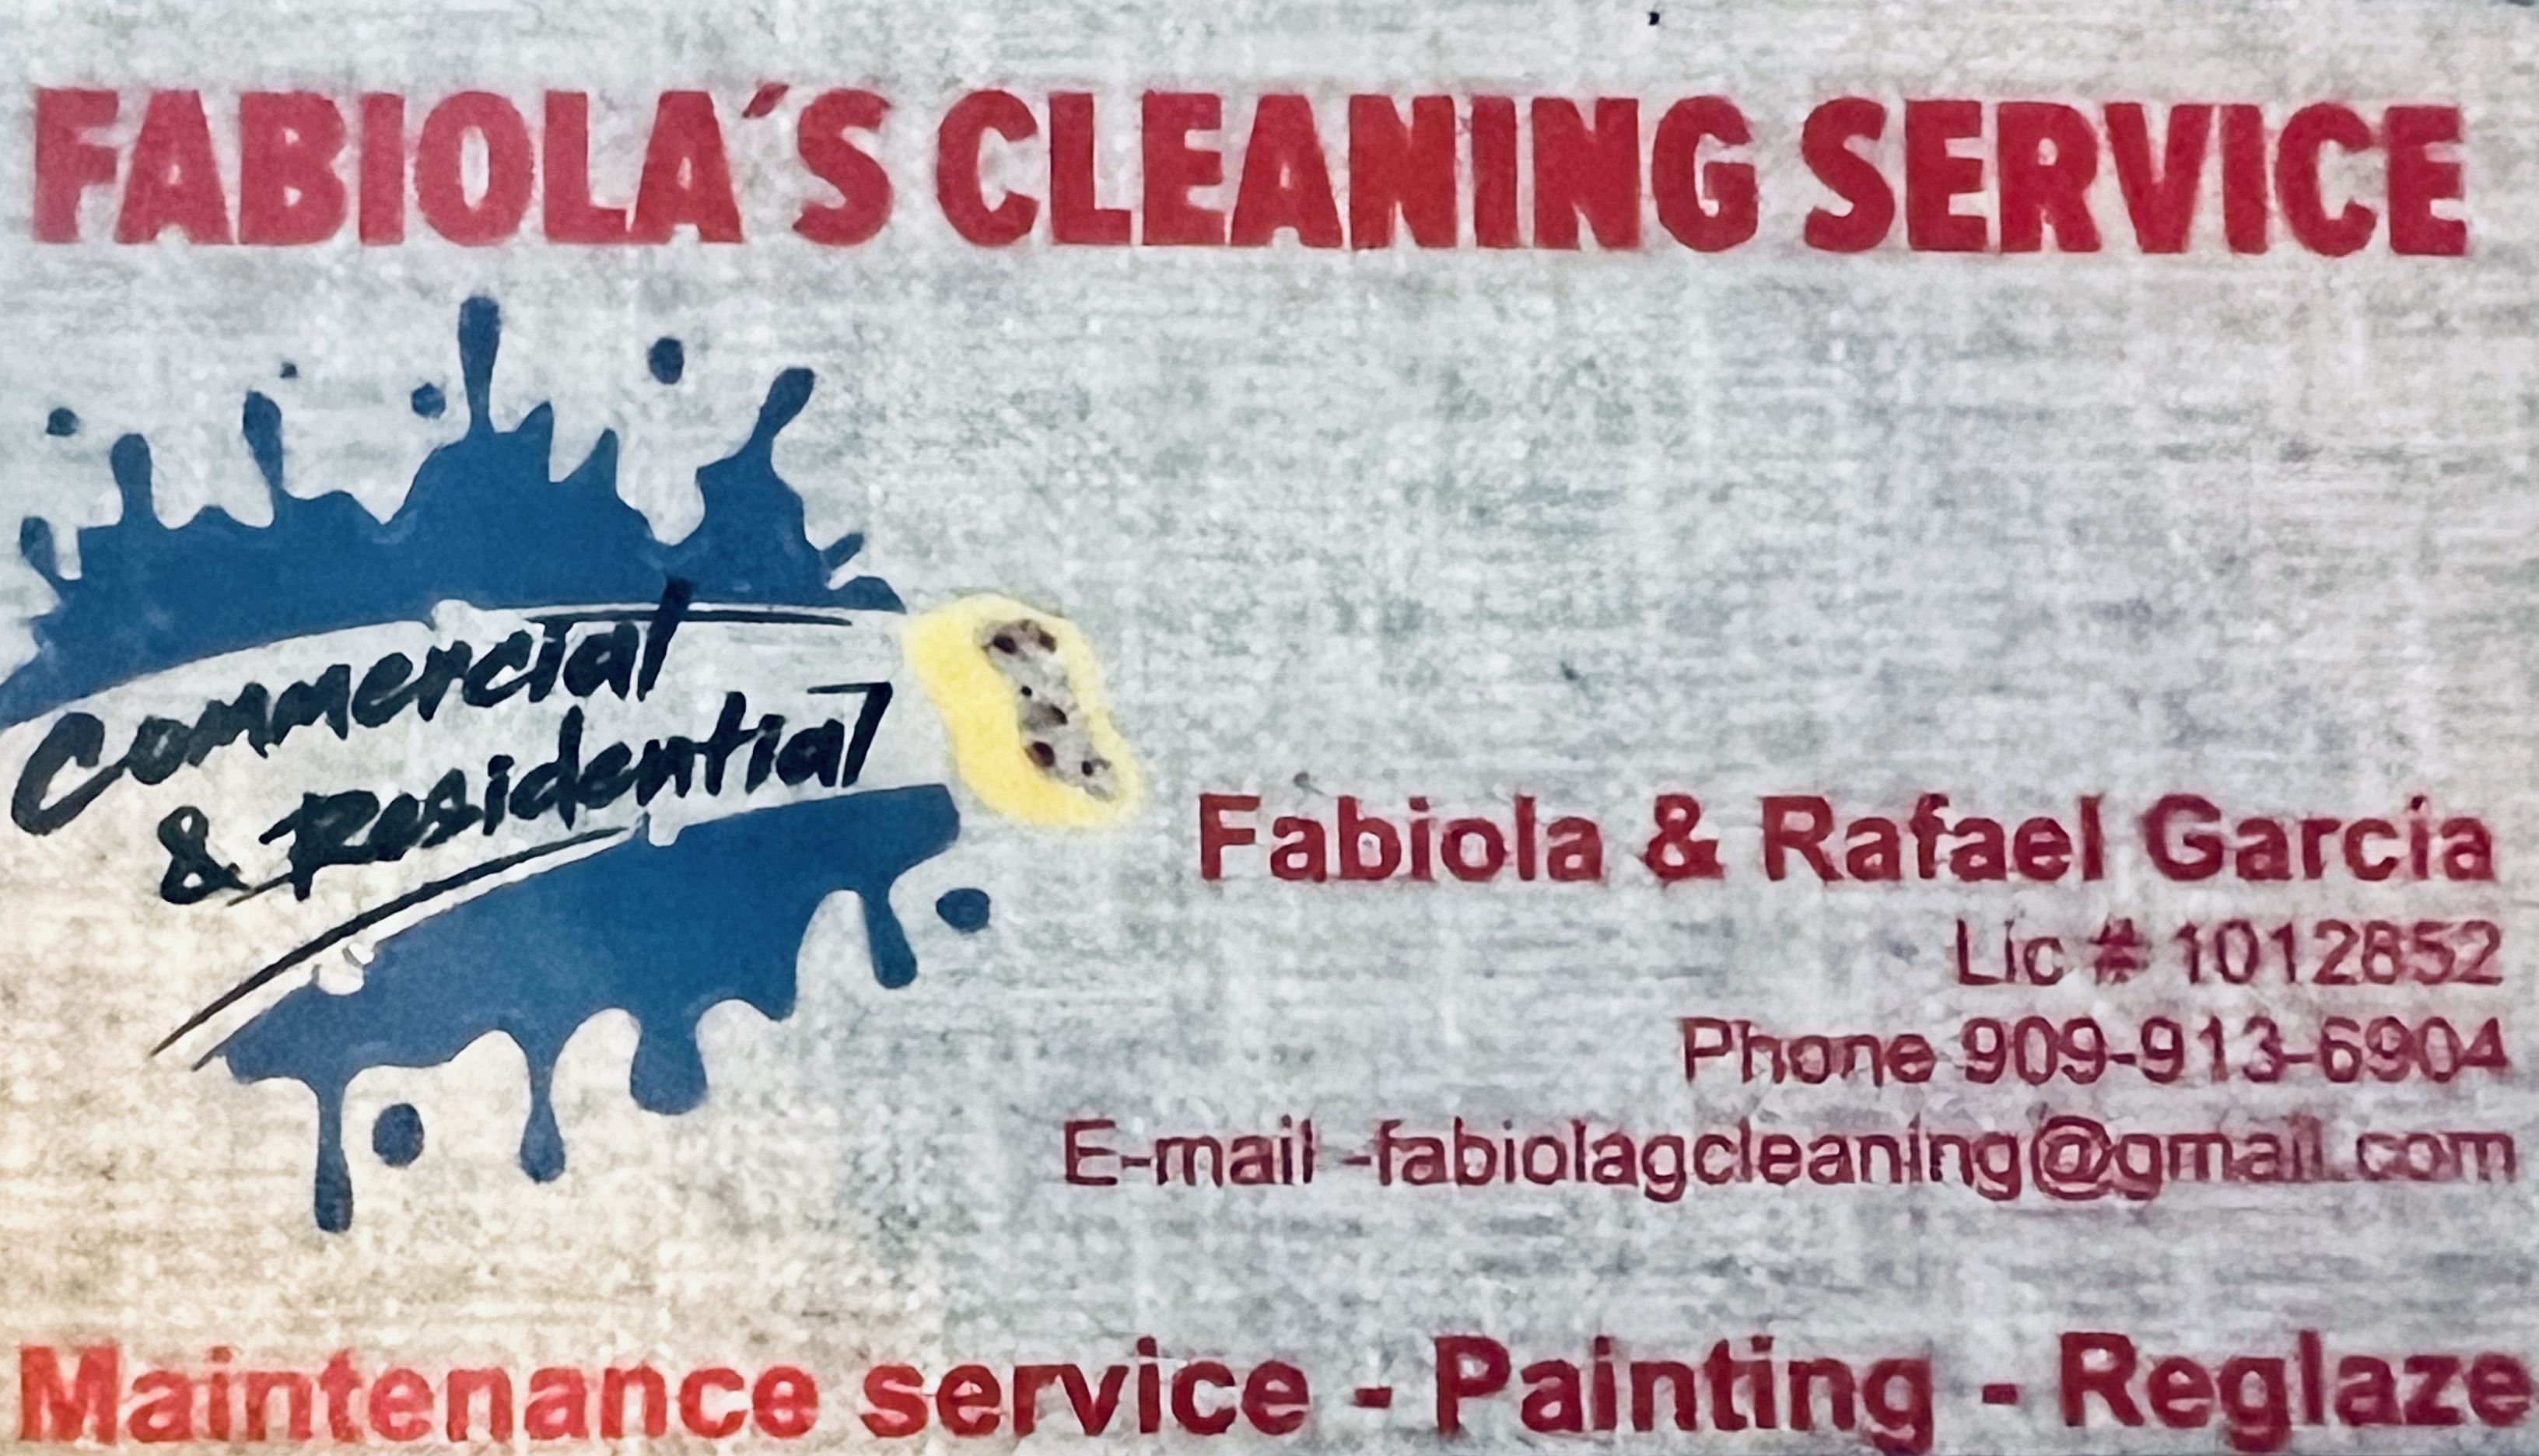 Fabiolas Cleaning Service